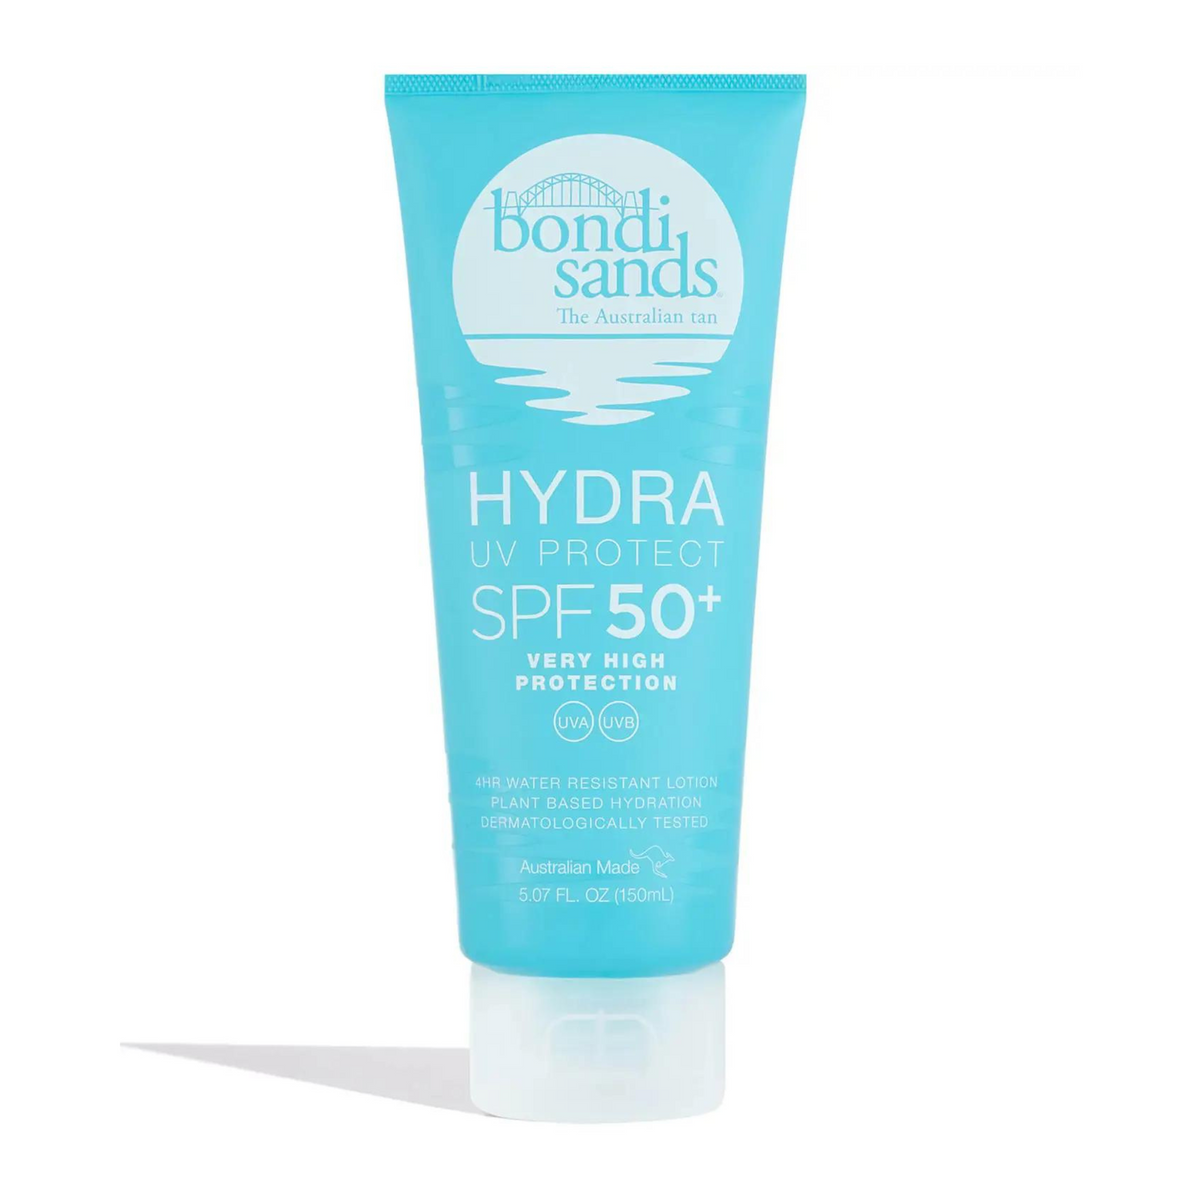 Hydra UV Protect SPF50 + Body Lotion